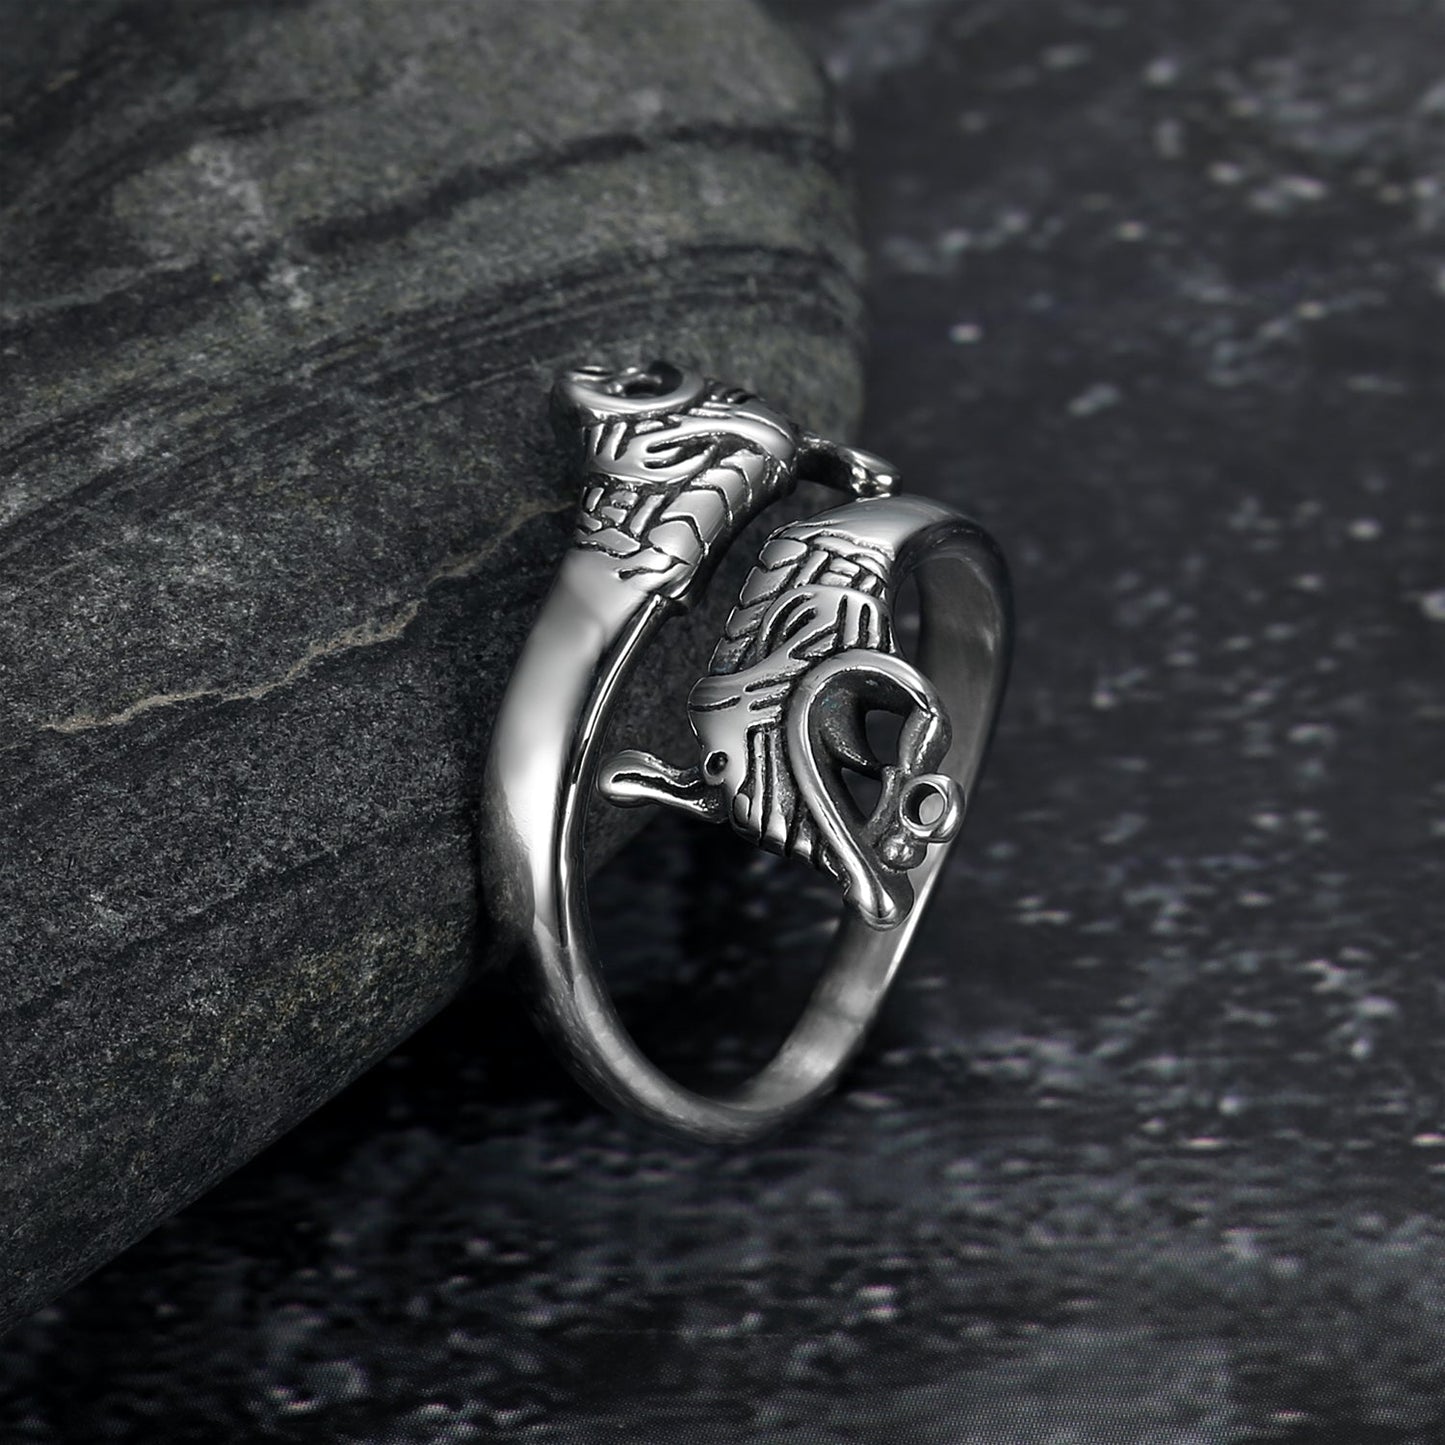 Nordic Pride Handcrafted Stainless Steel Adjustable Jormungand Ring